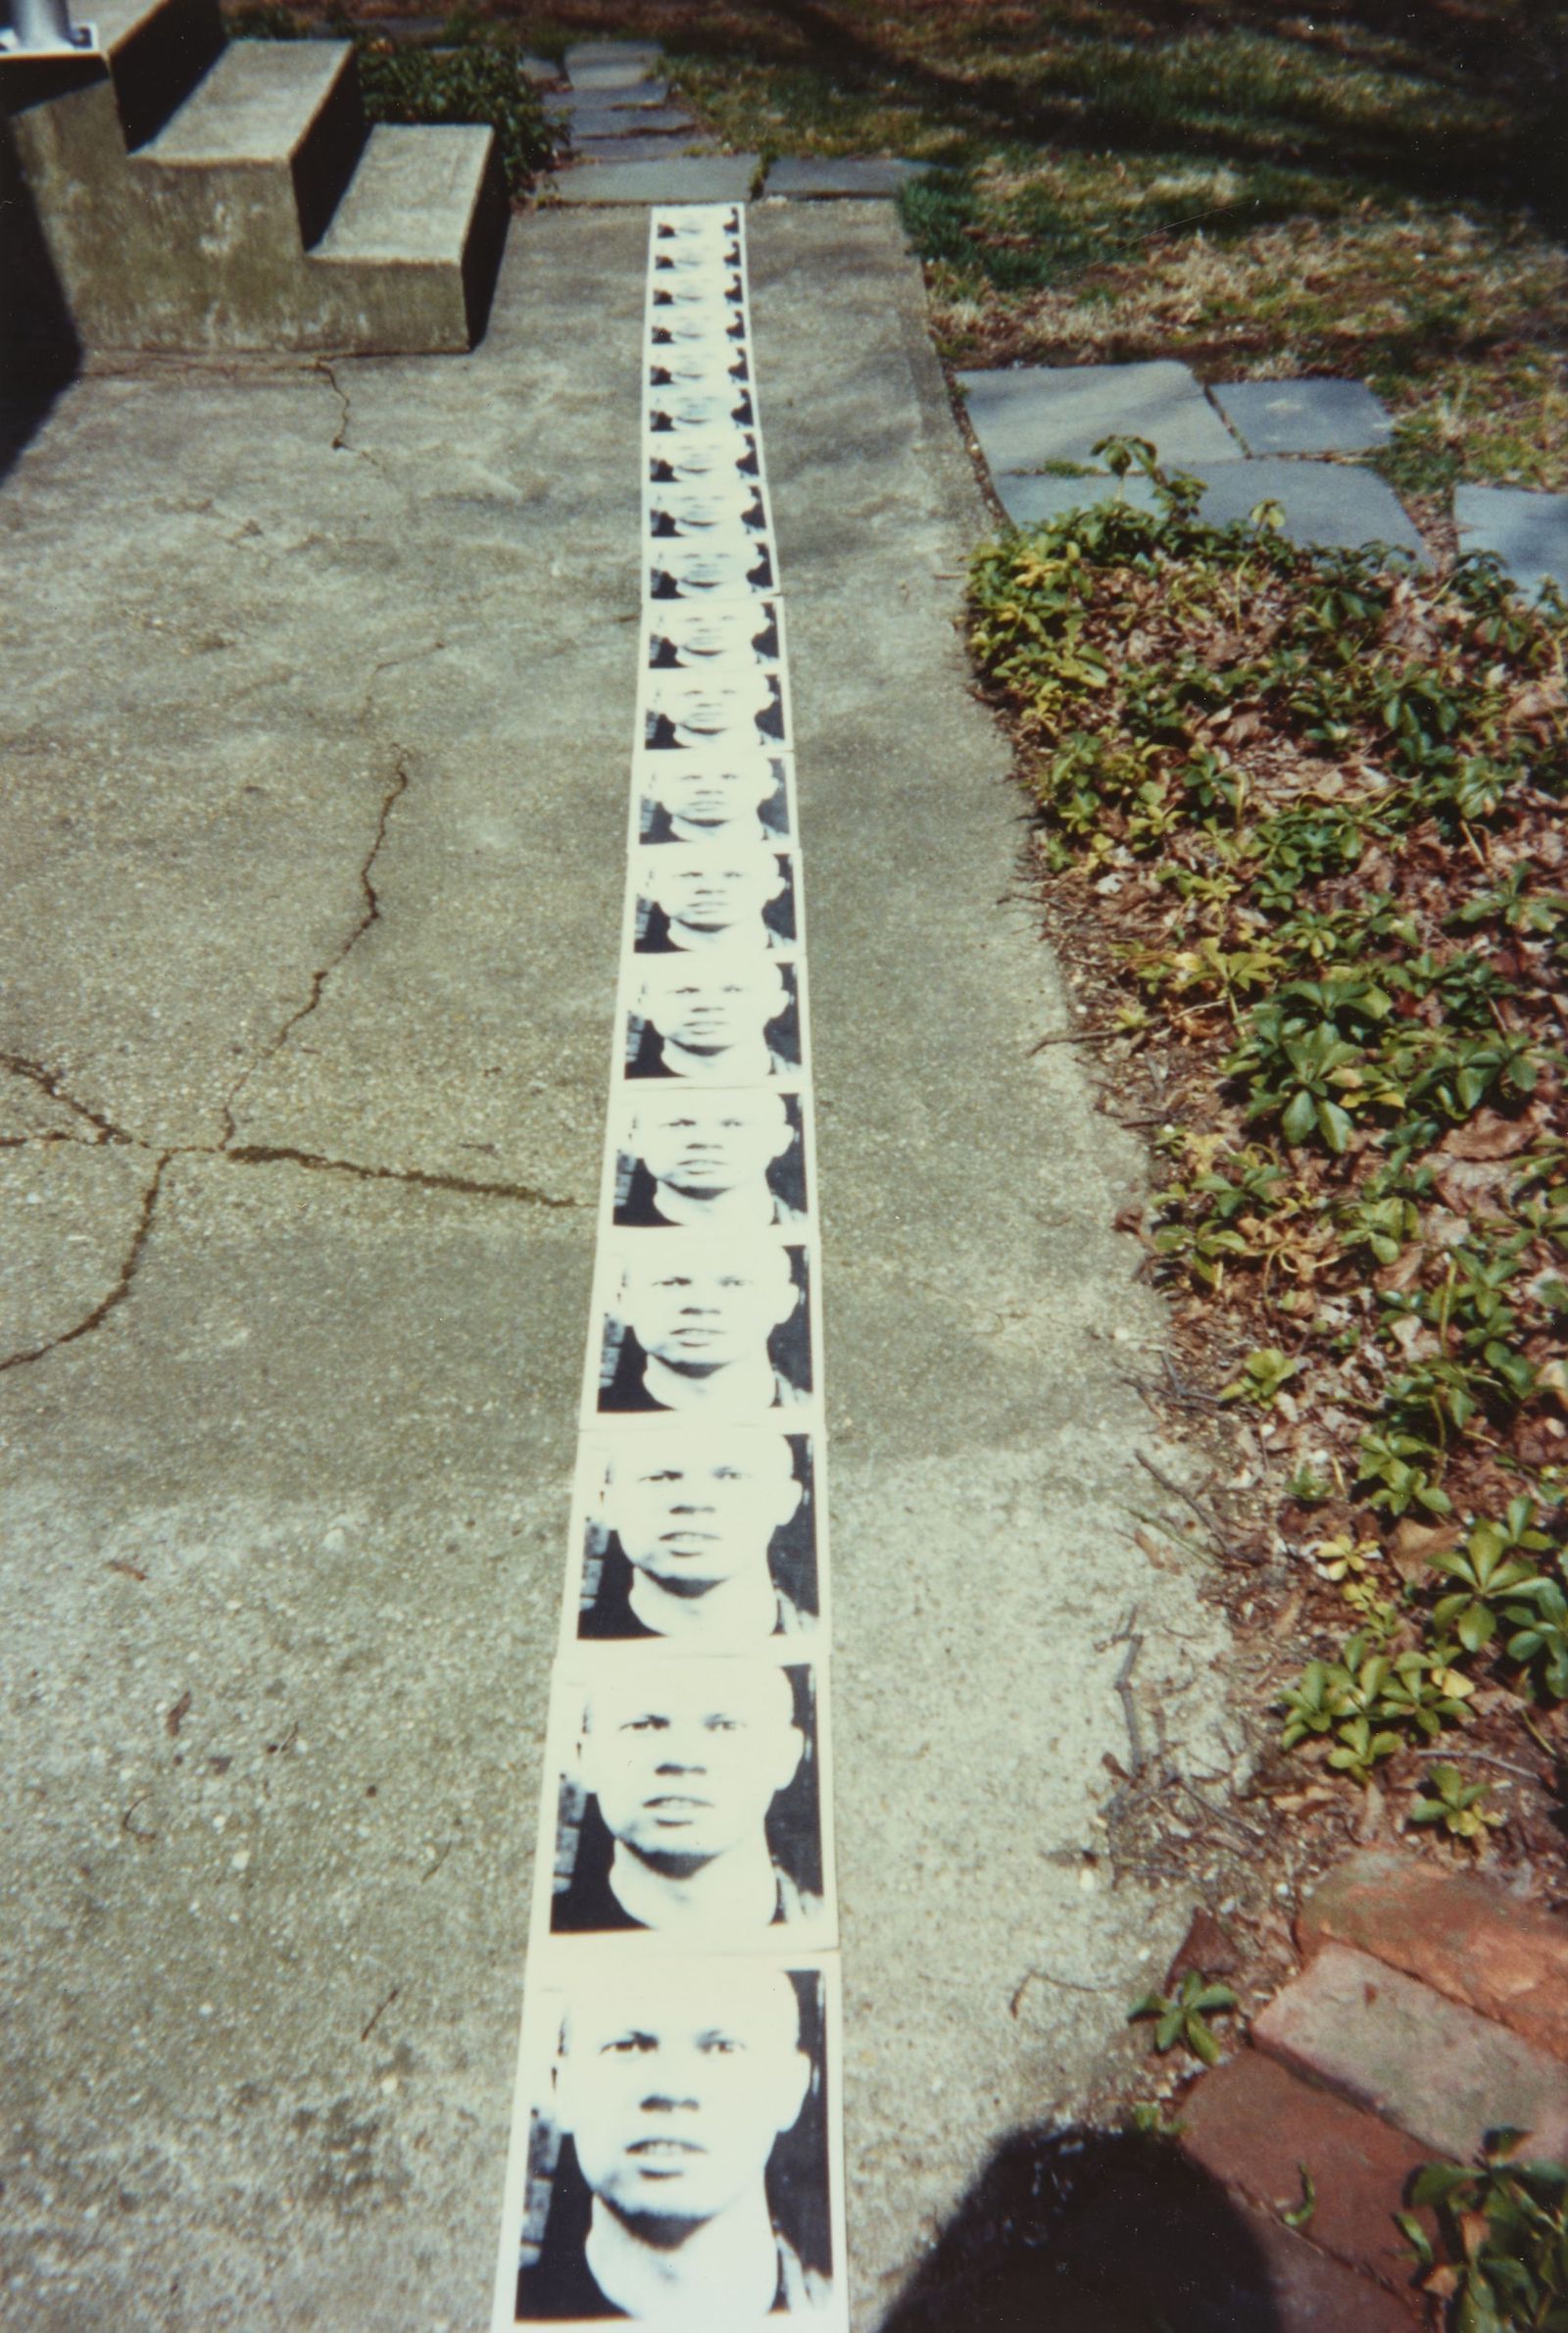 a long vertical row of photographs of the same face, extending up a sidewalk